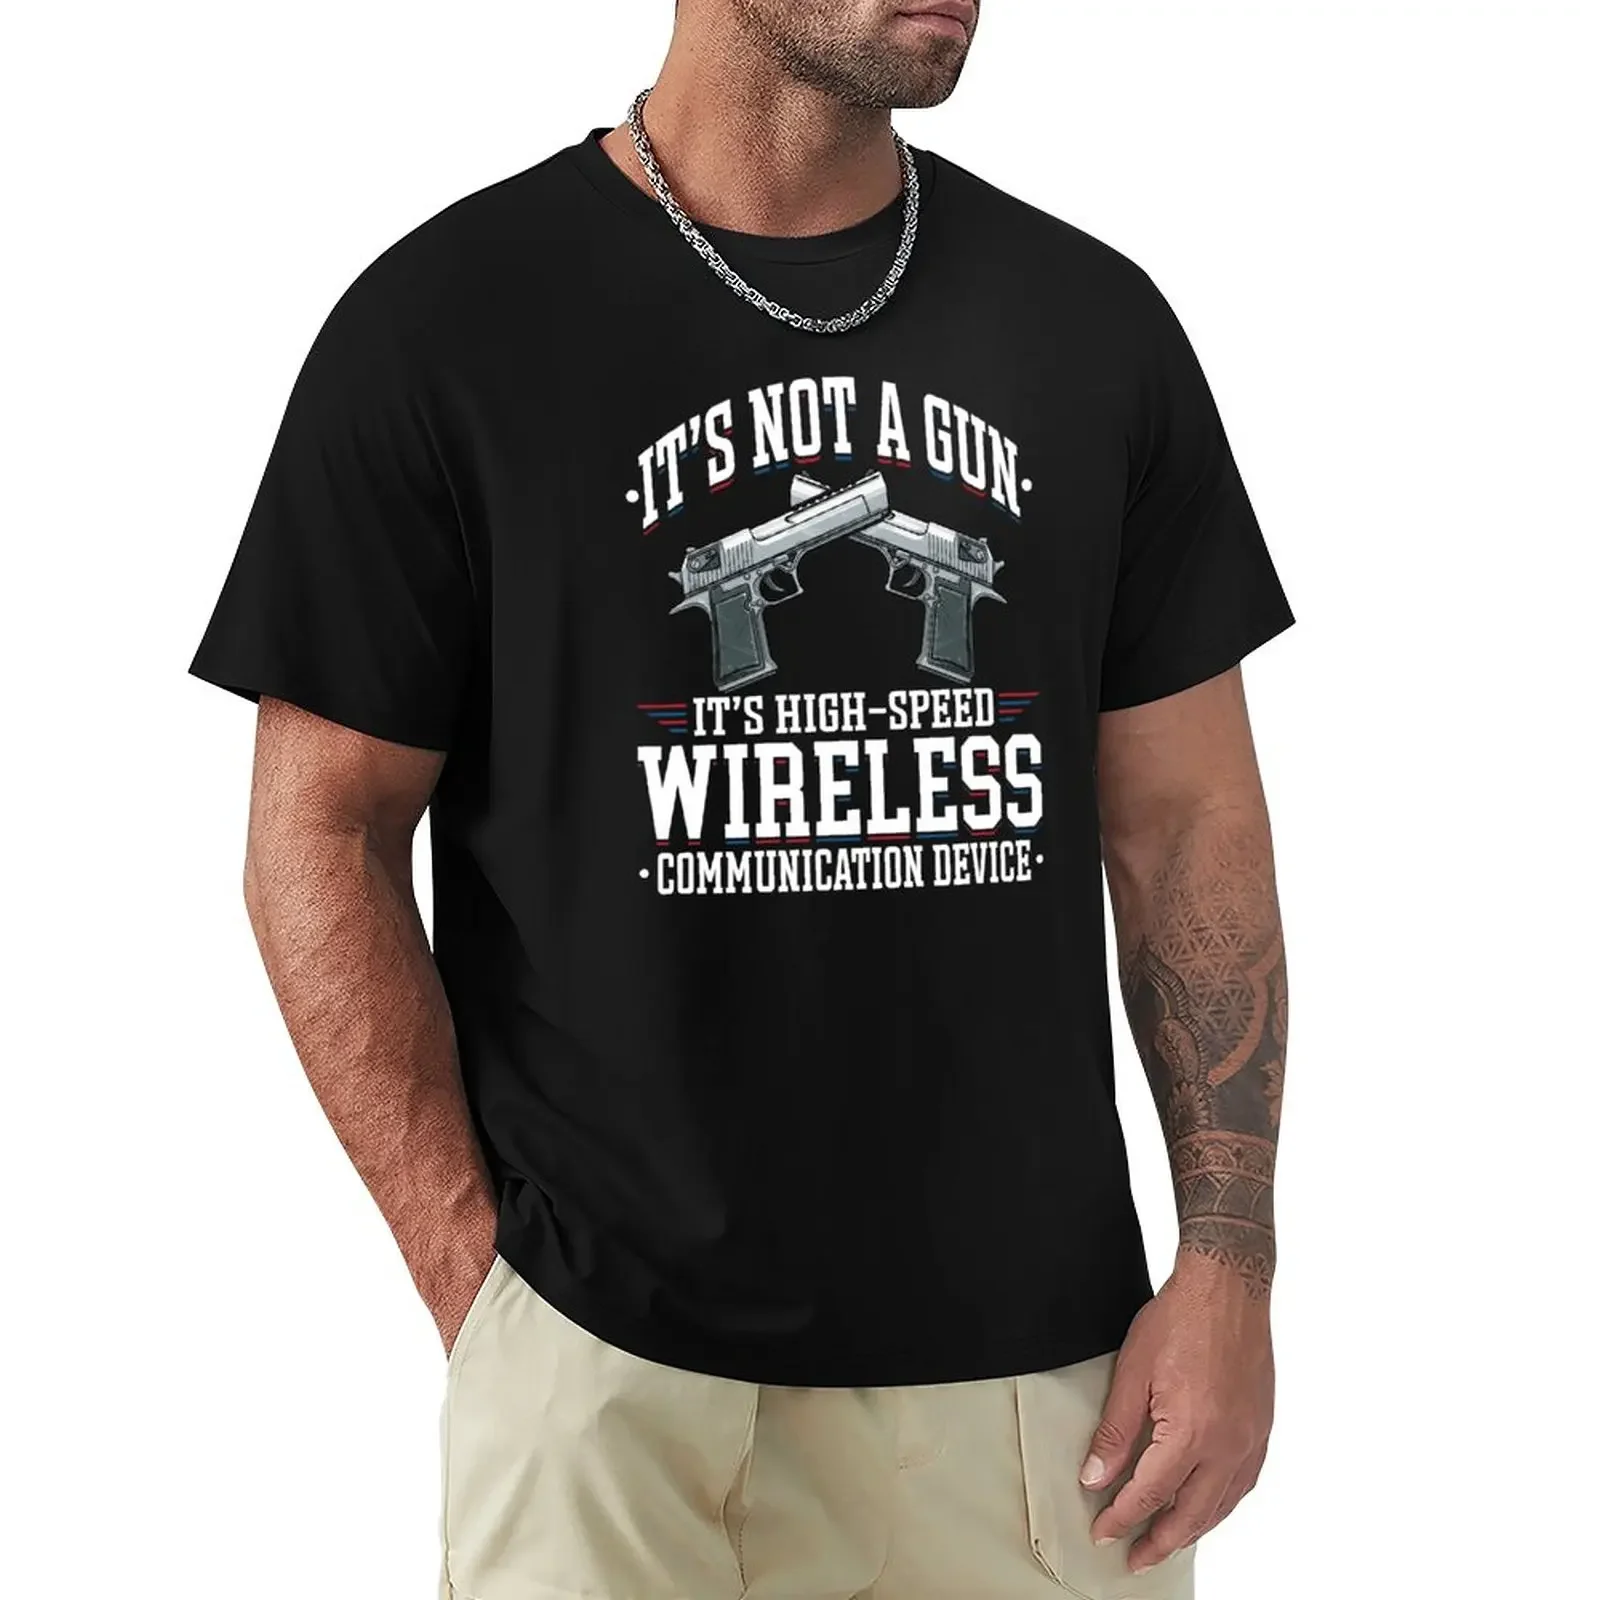 

gun product, weapon design, gun owner T-Shirt summer top plus sizes graphics mens t shirt